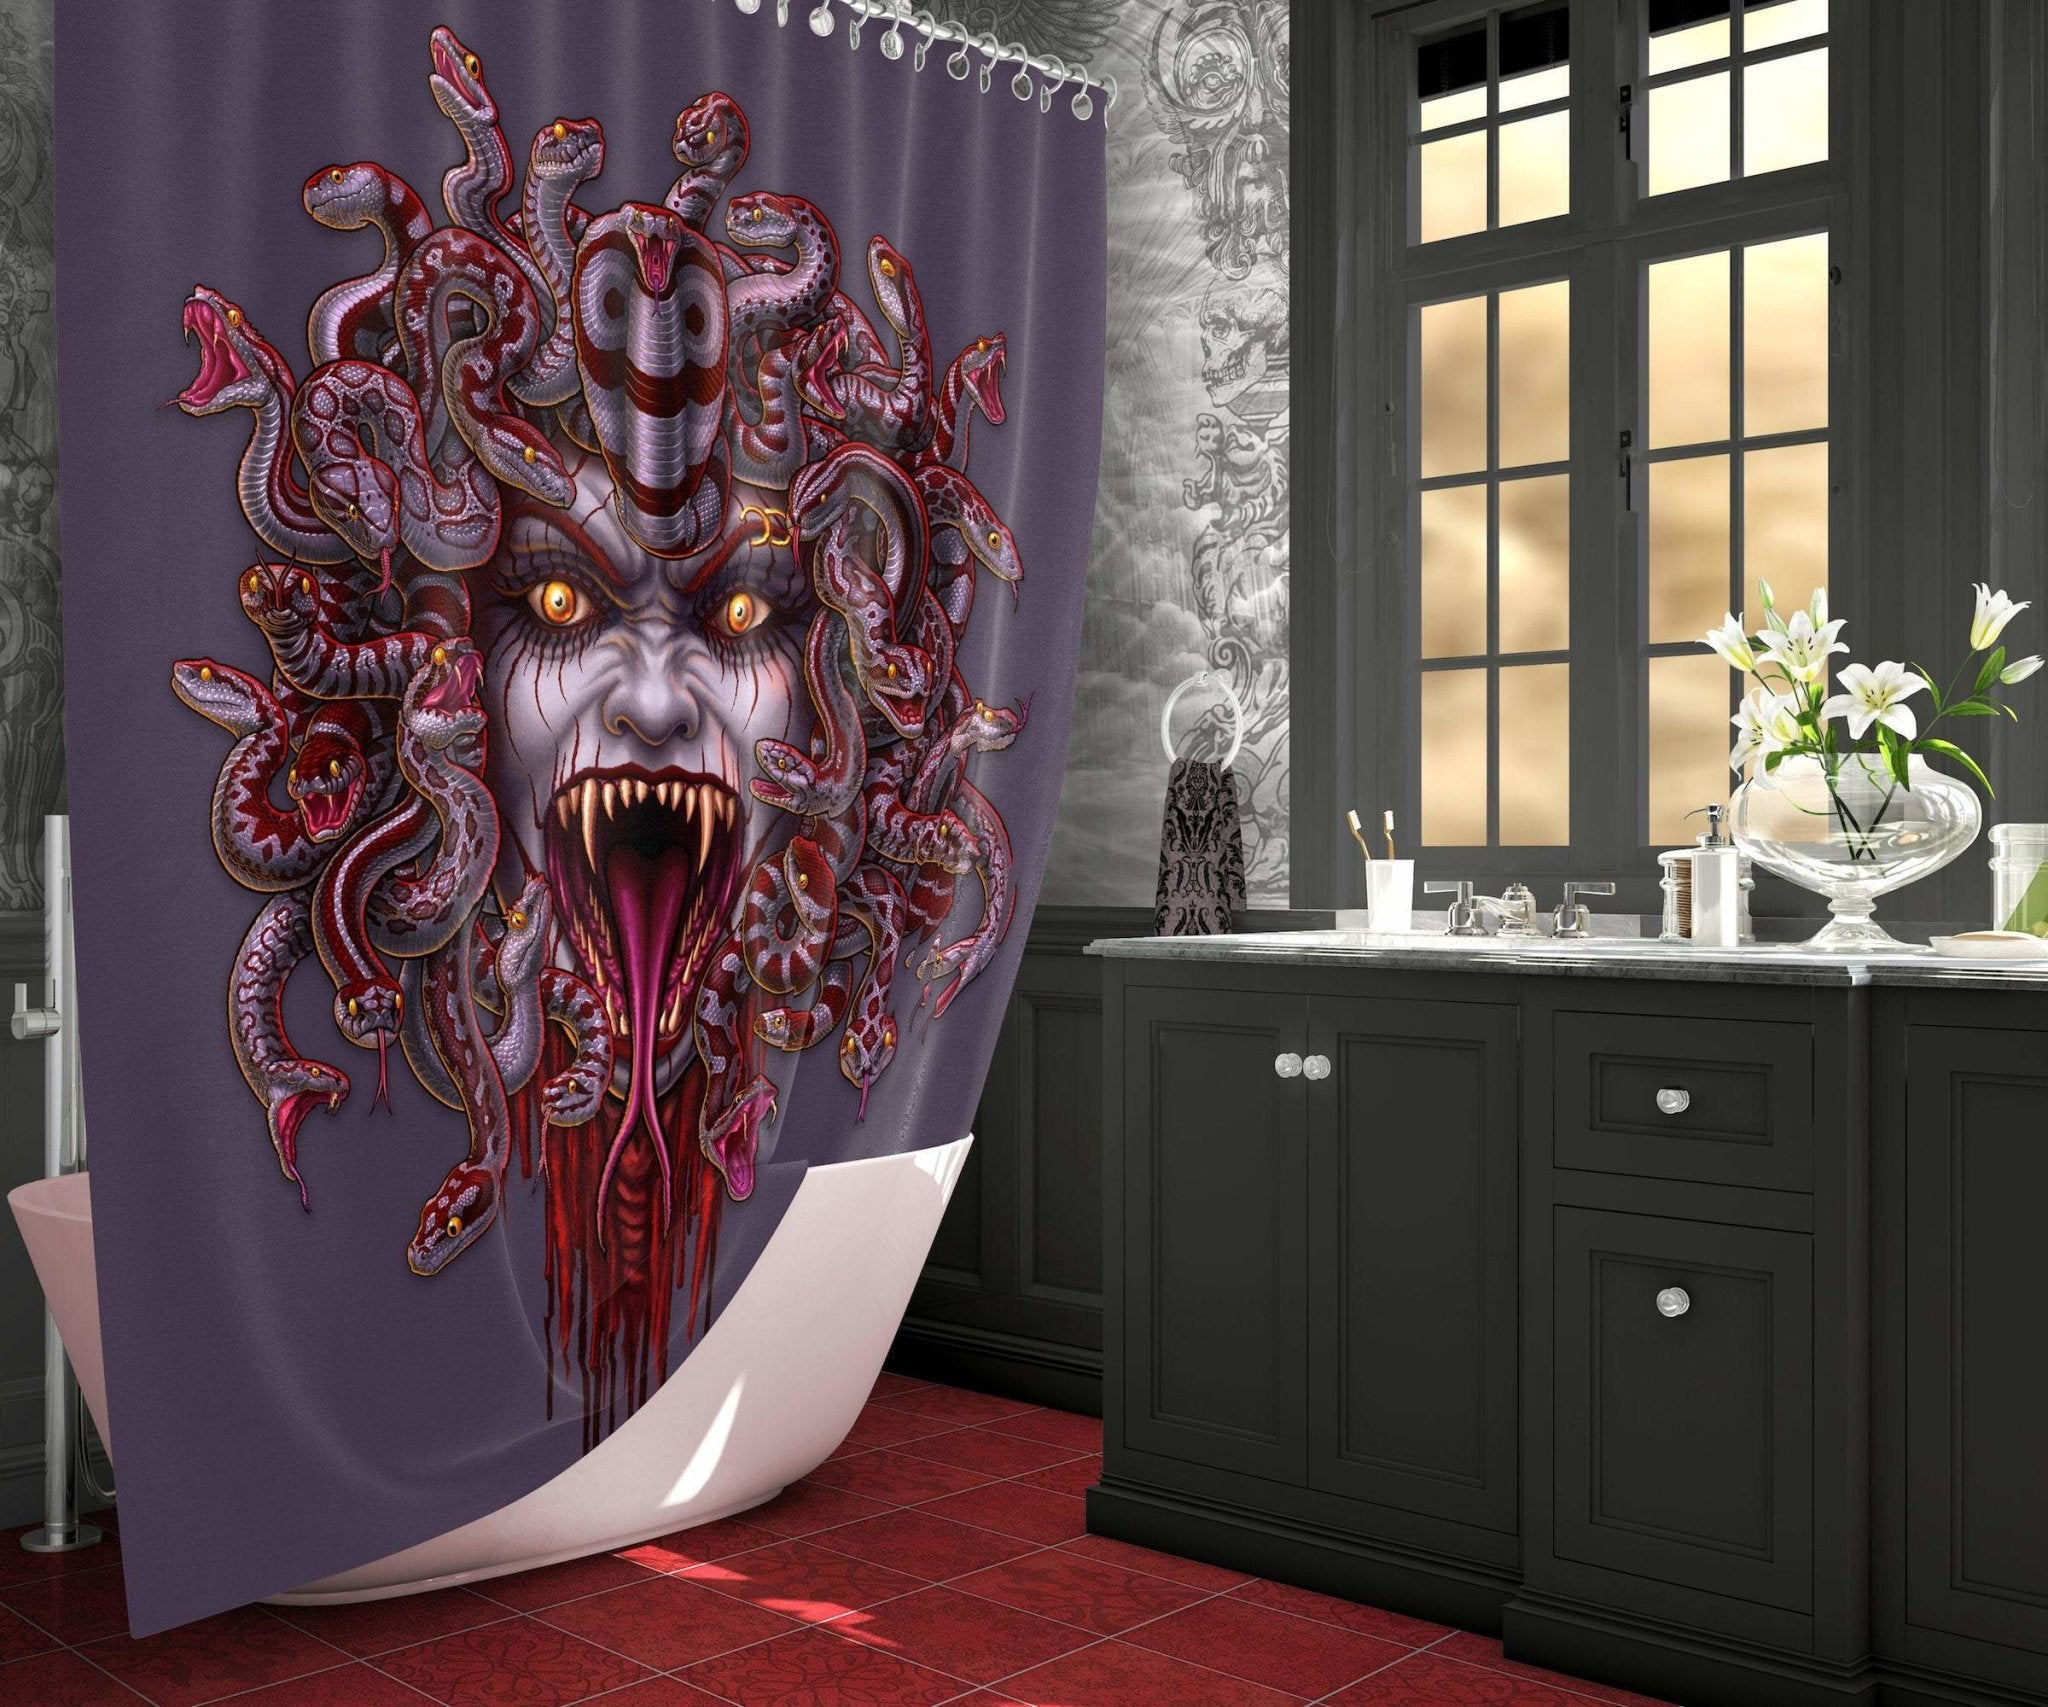 Medusa Shower Curtain, Gothic Bathroom Decor, Bloody Gorgon - Enraged, Ash, Grey & Red Snakes - Abysm Internal